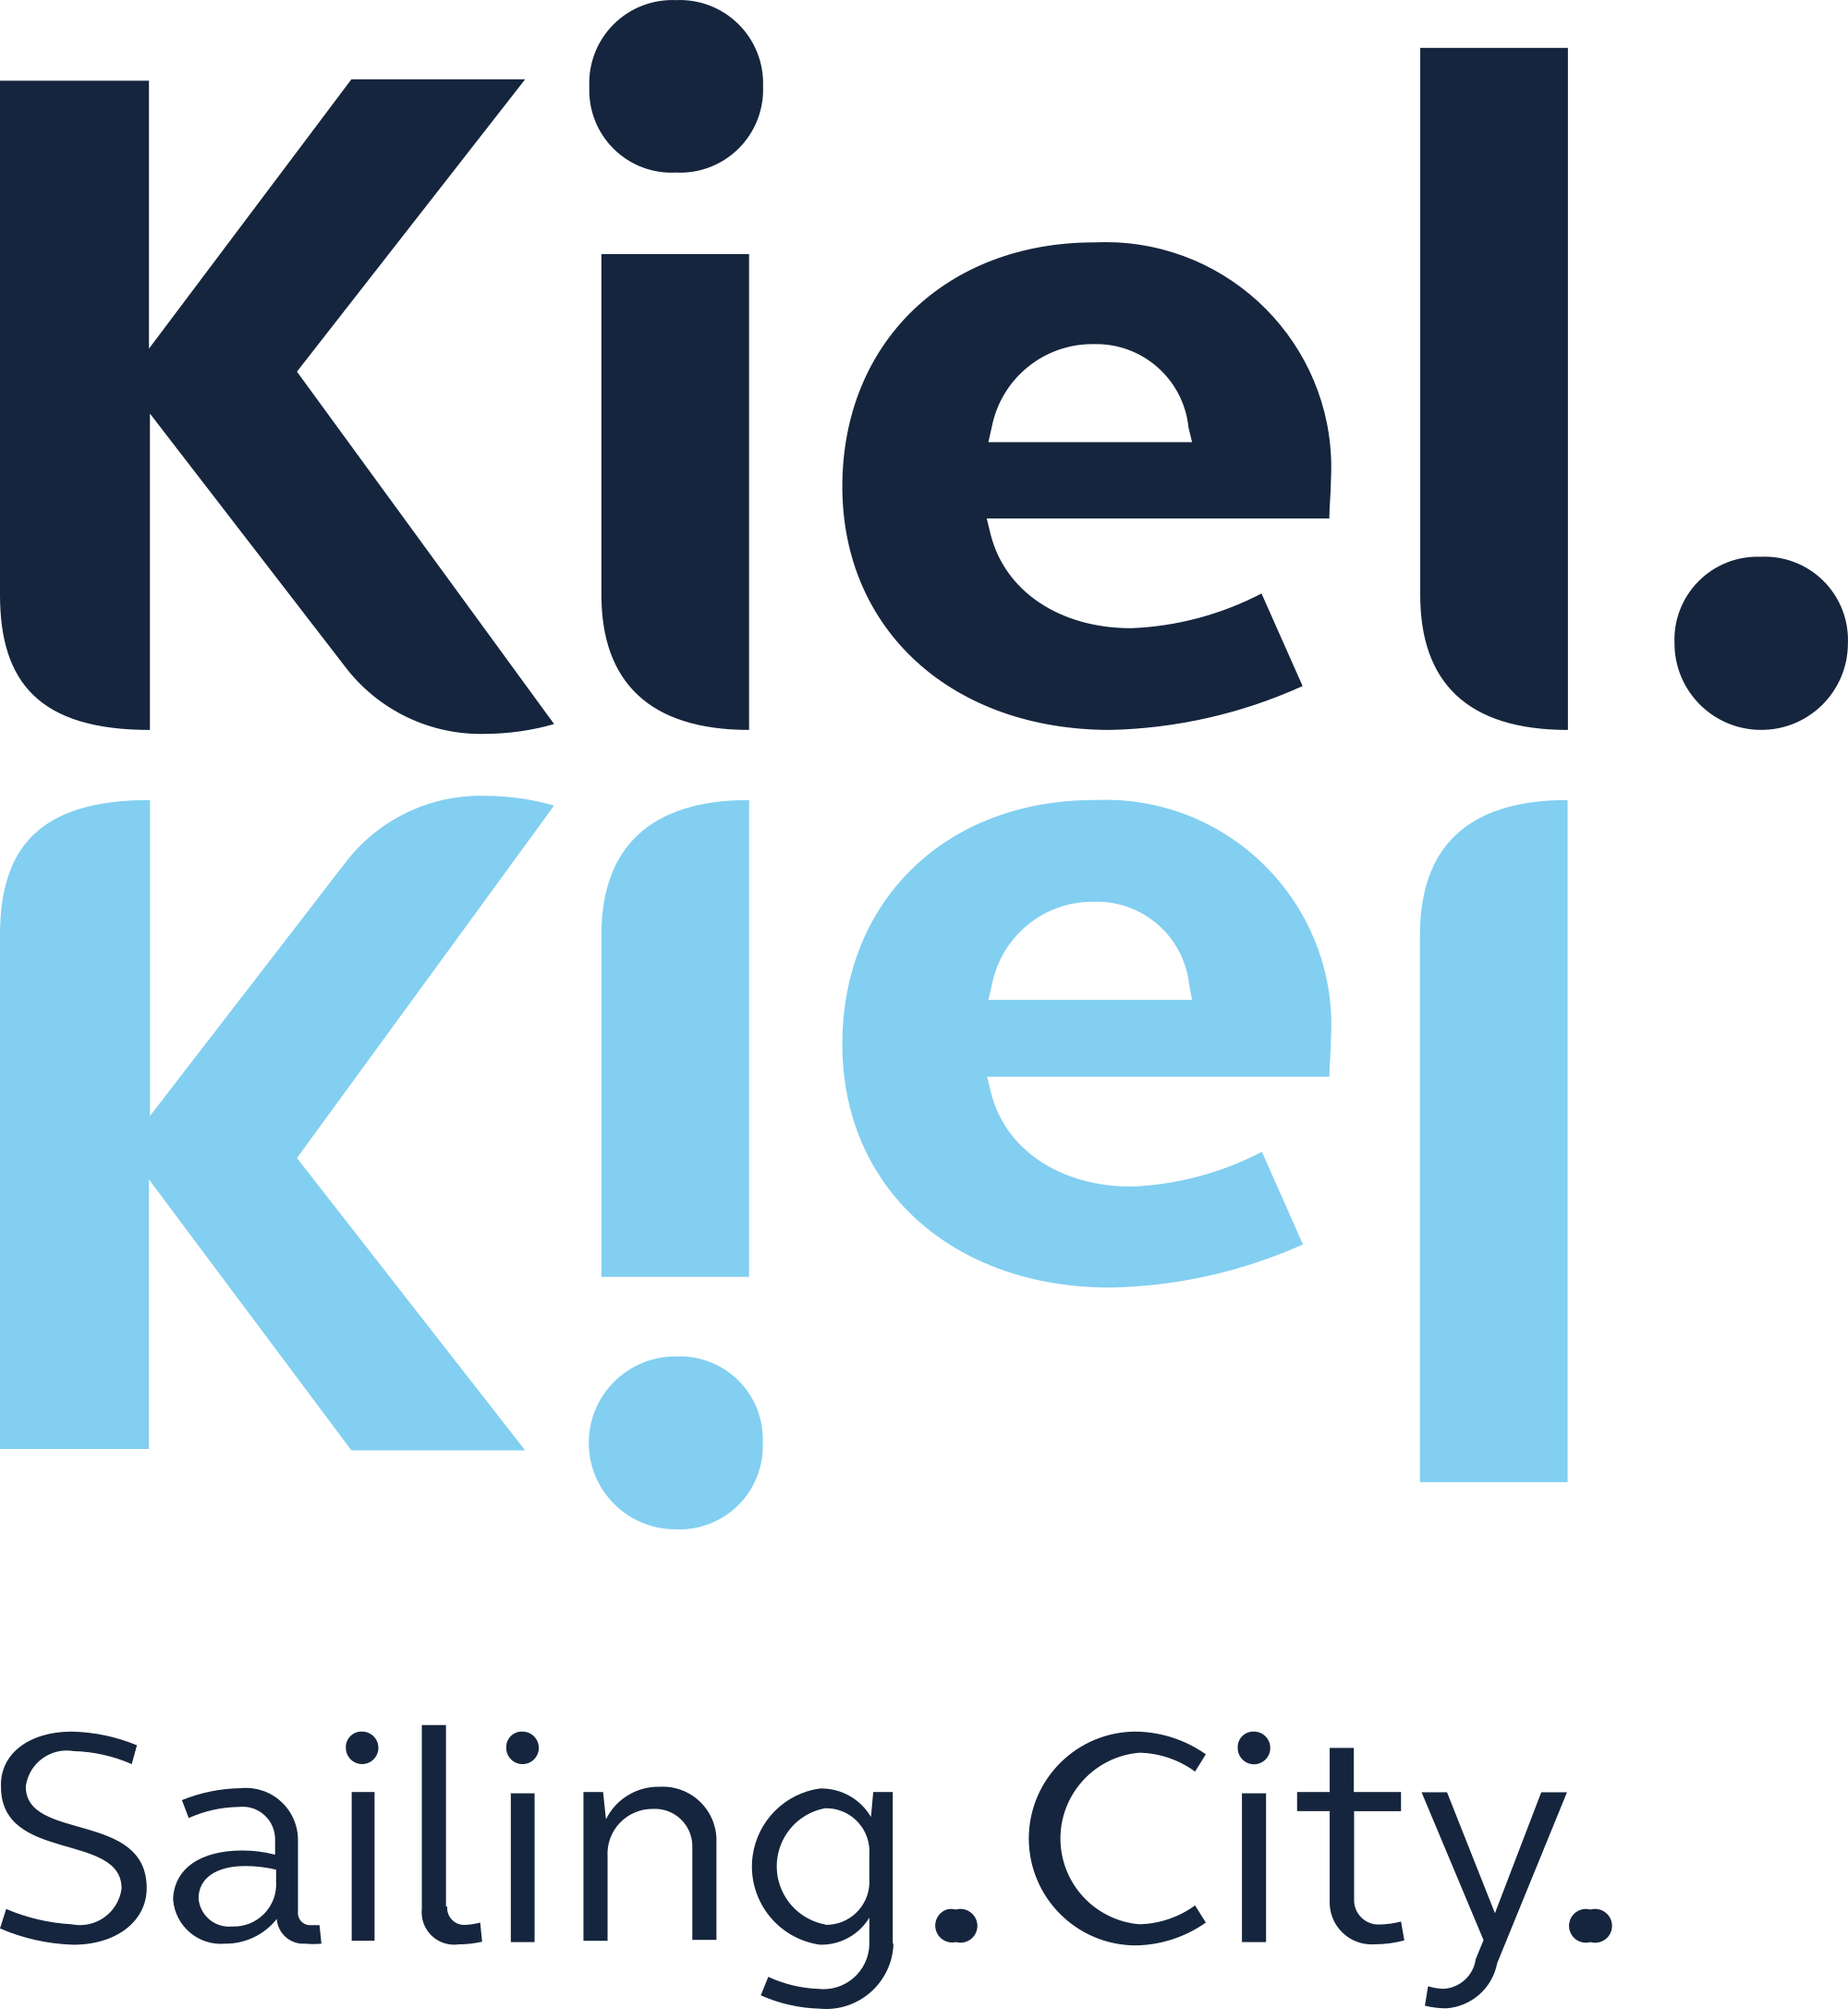 Kiel Logo - File:Logo kielsailingcity v2.svg - Wikimedia Commons